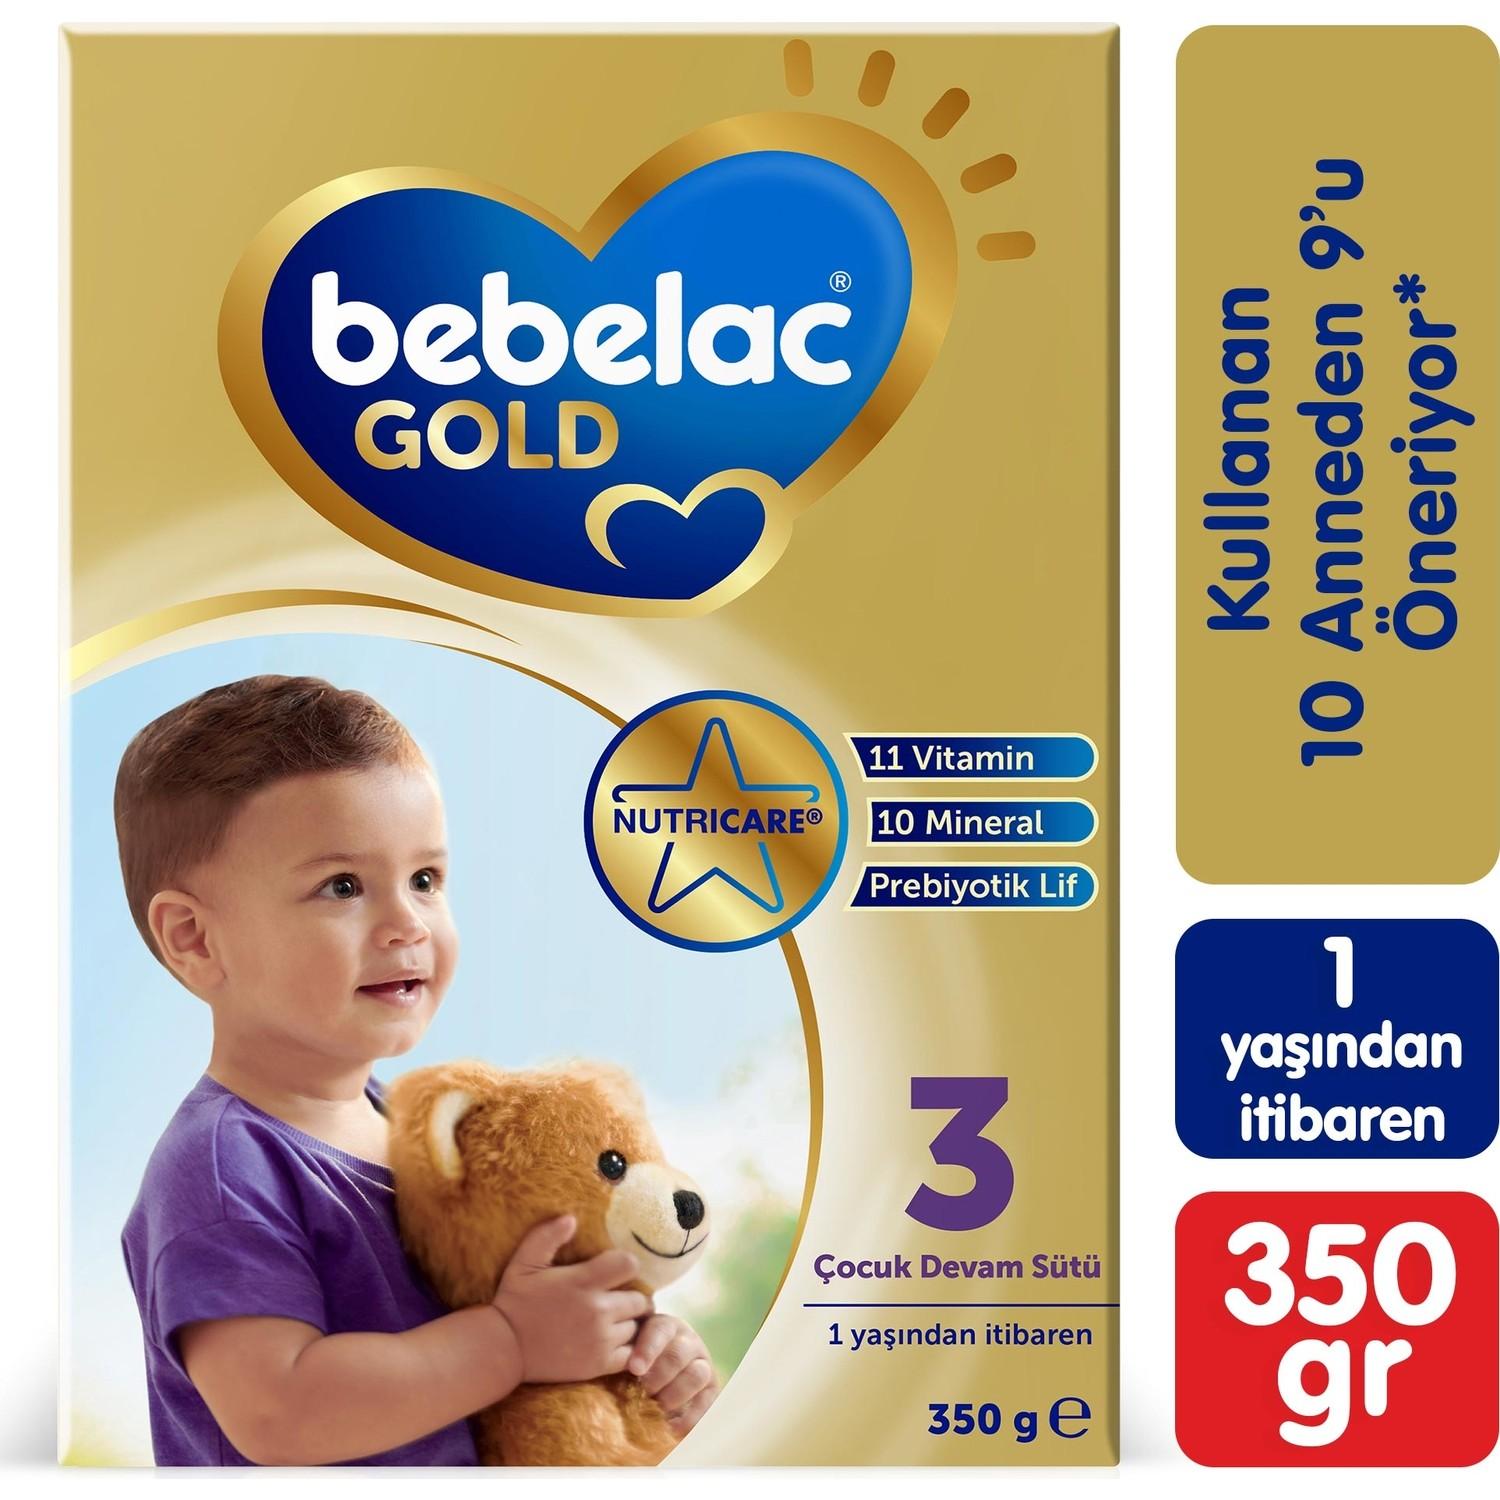 Bebelac Gold 3 Çocuk Devam Sütü 350 gr 2'li Paket